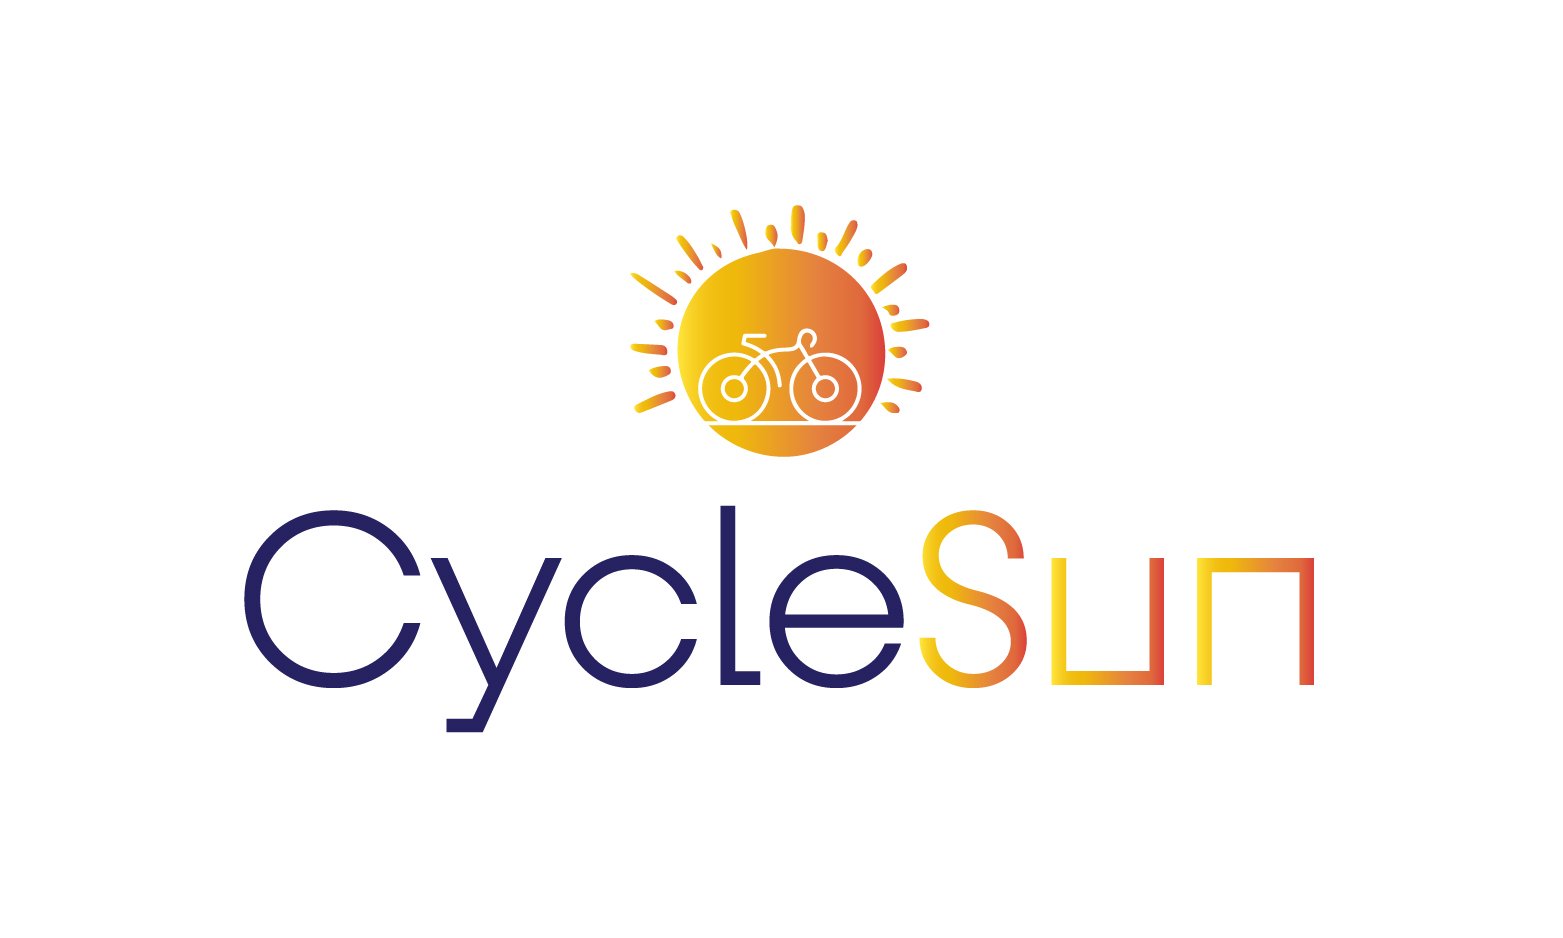 CycleSun.com - Creative brandable domain for sale